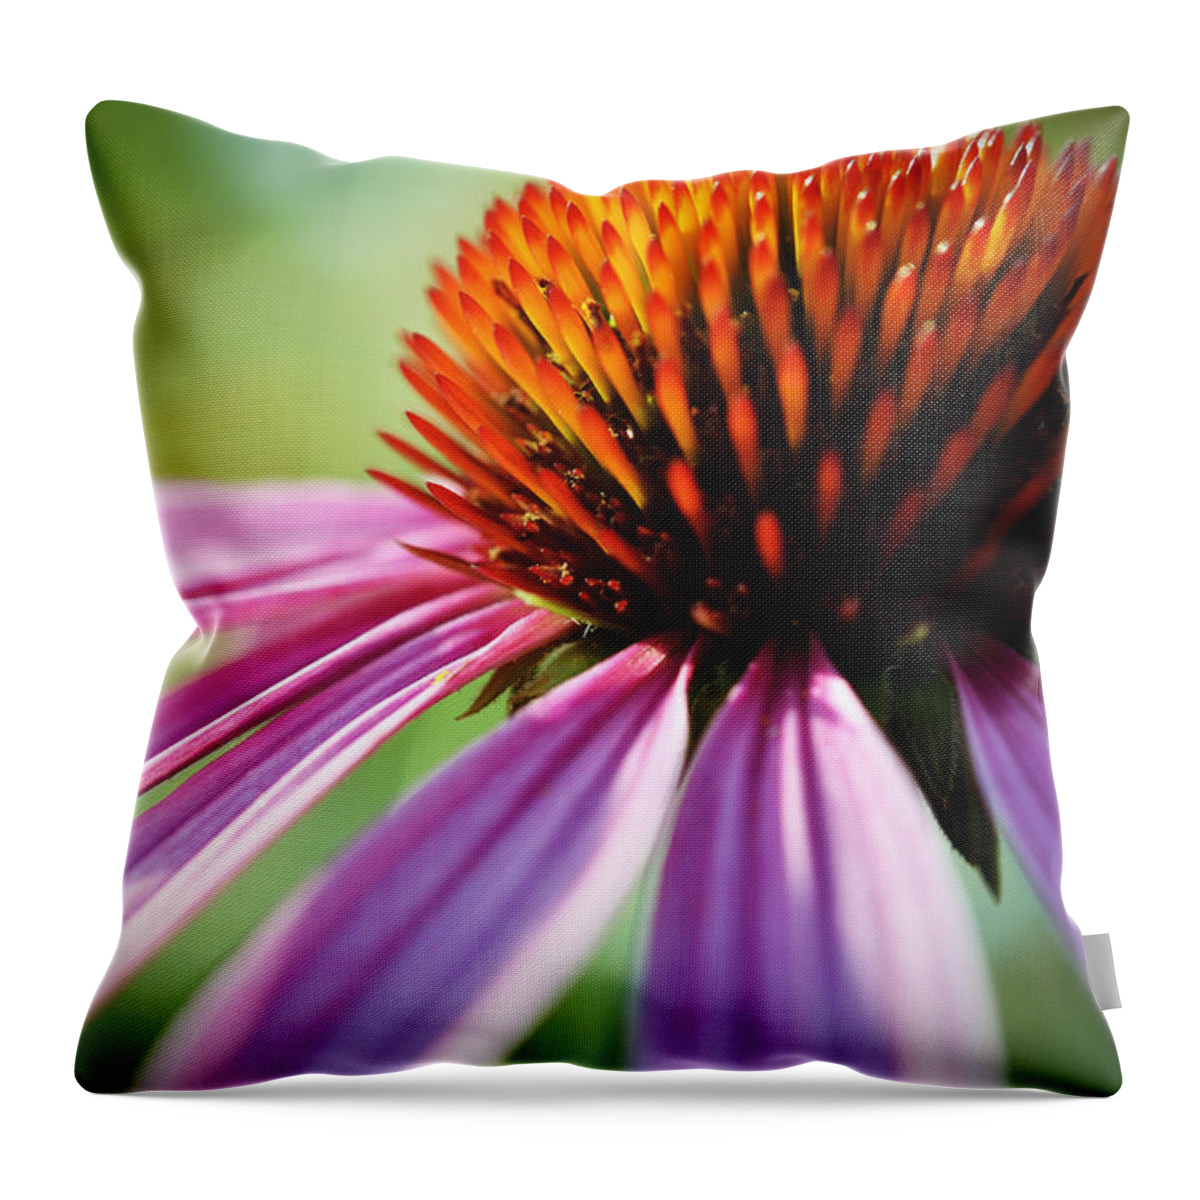 Flower Throw Pillow featuring the photograph Petal's Edge by Andrea Platt